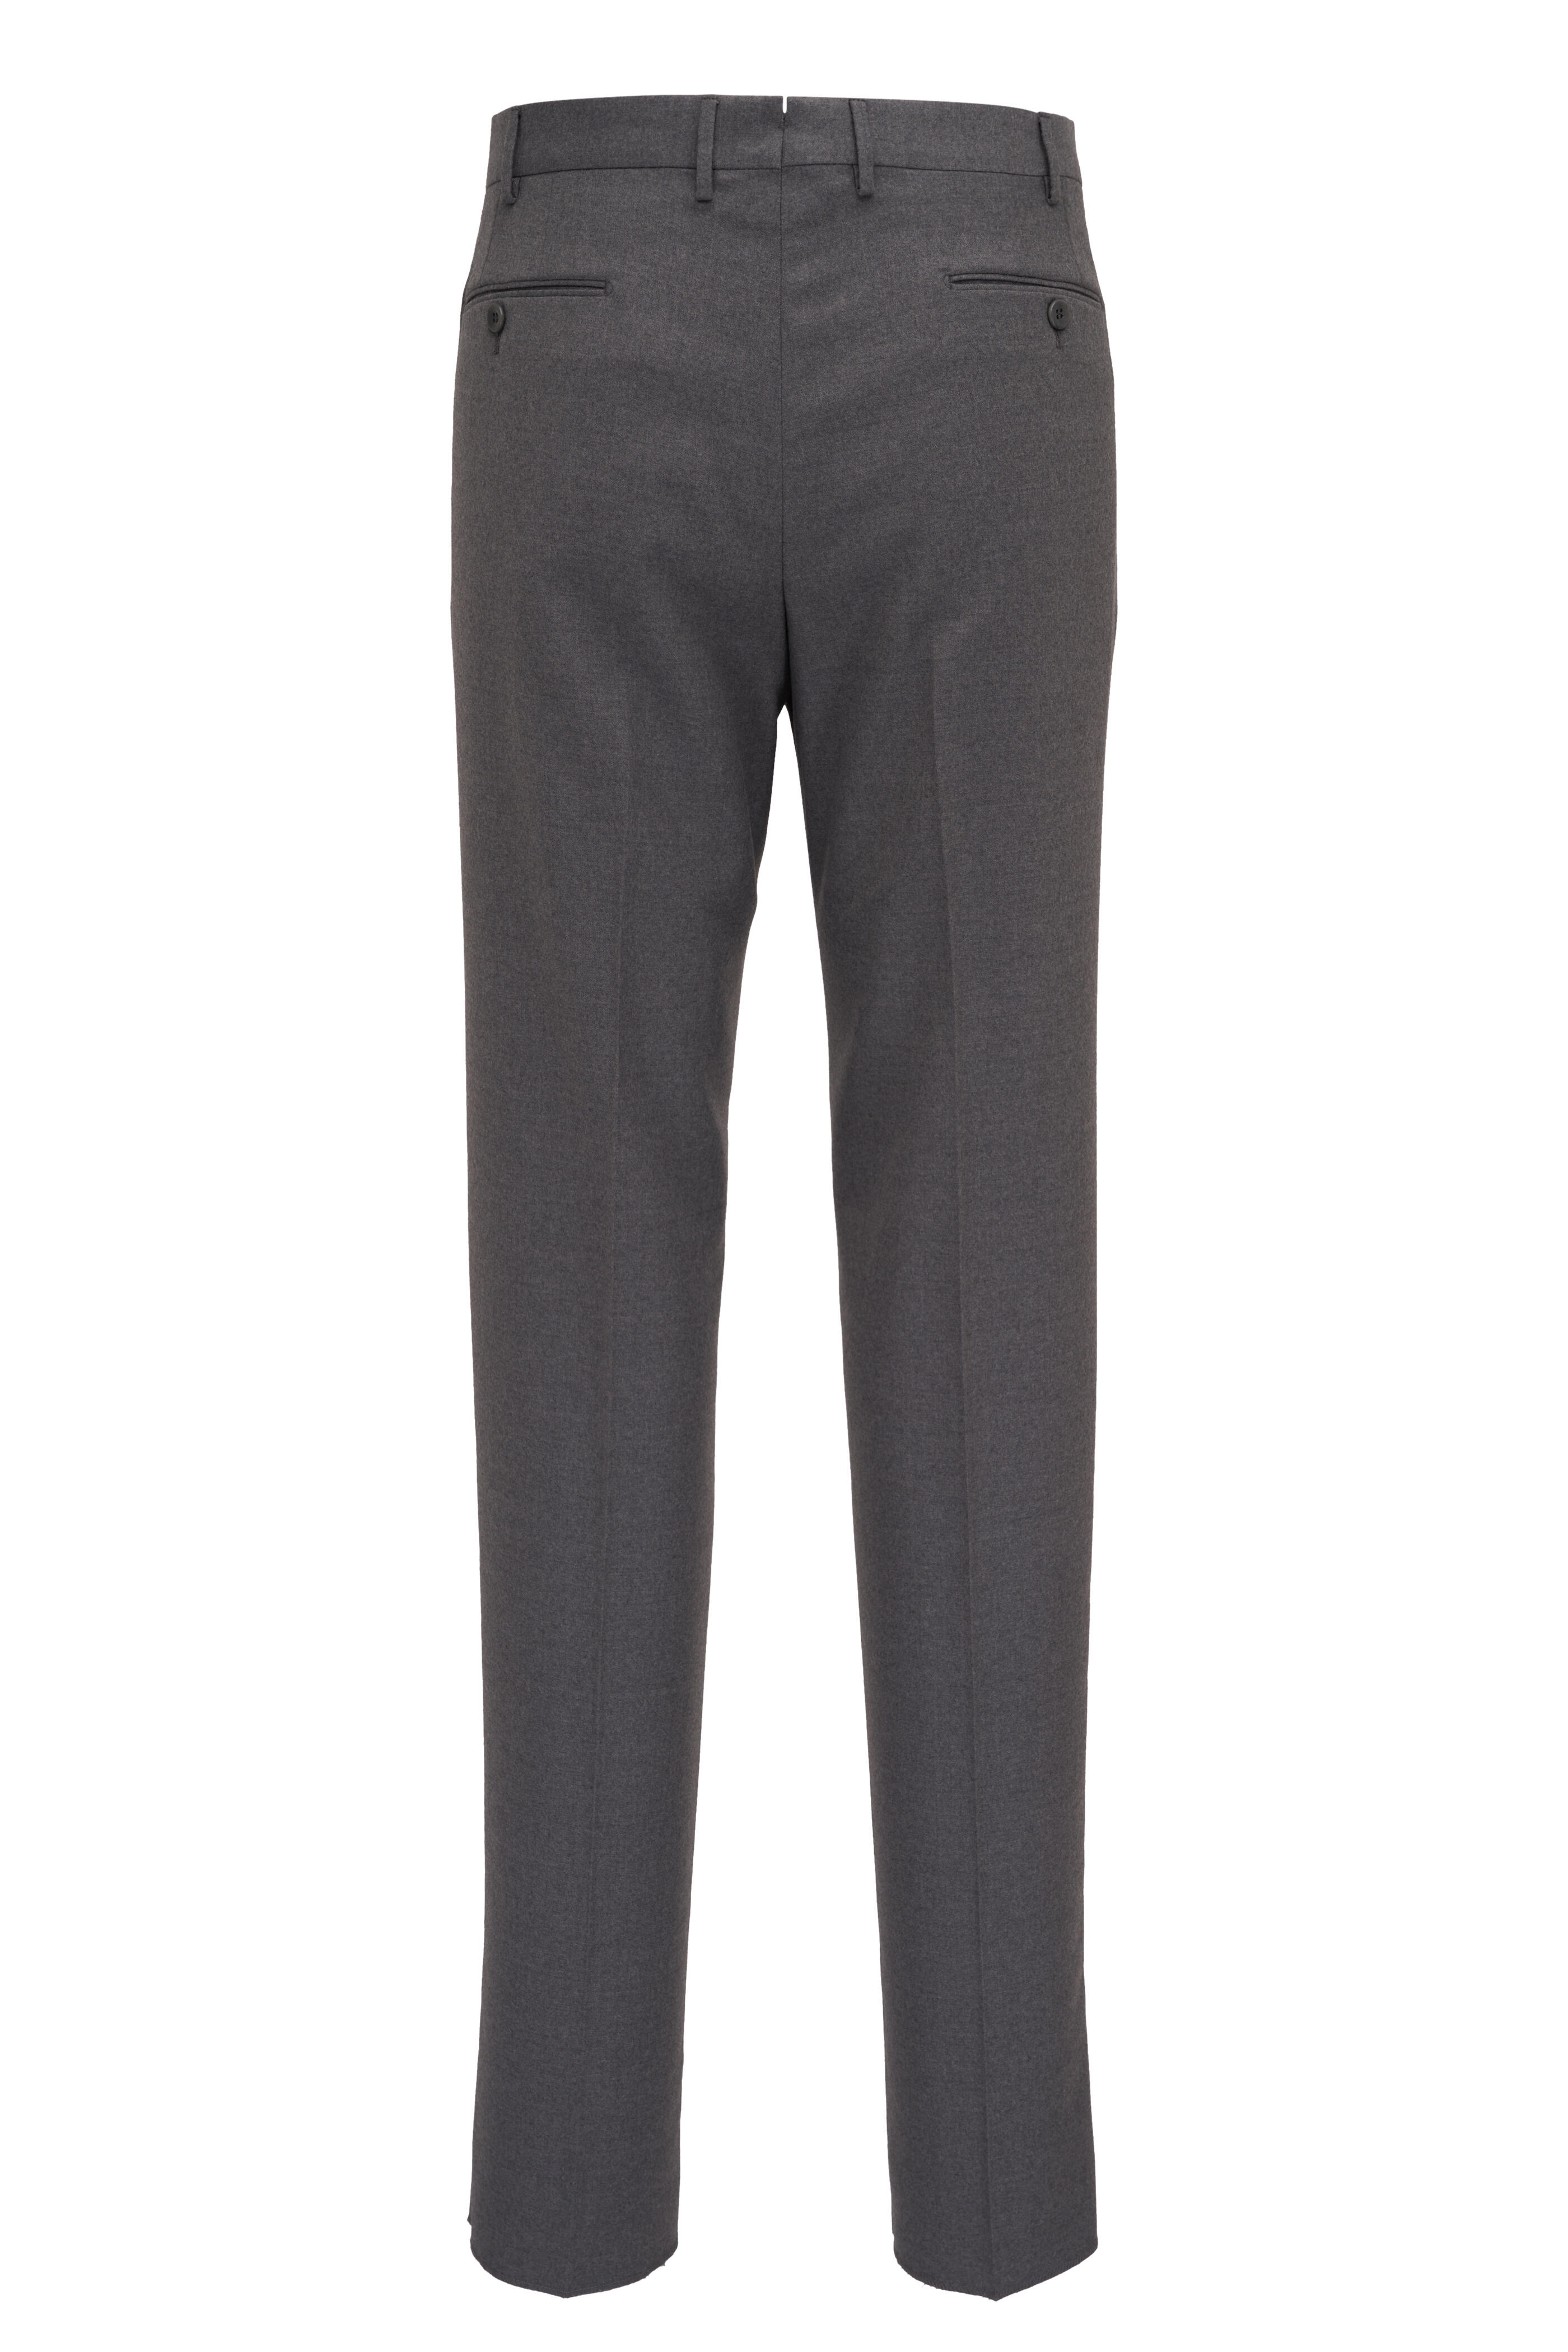 Malcom - Parma Medium Gray Flannel Dress Pant | Mitchell Stores